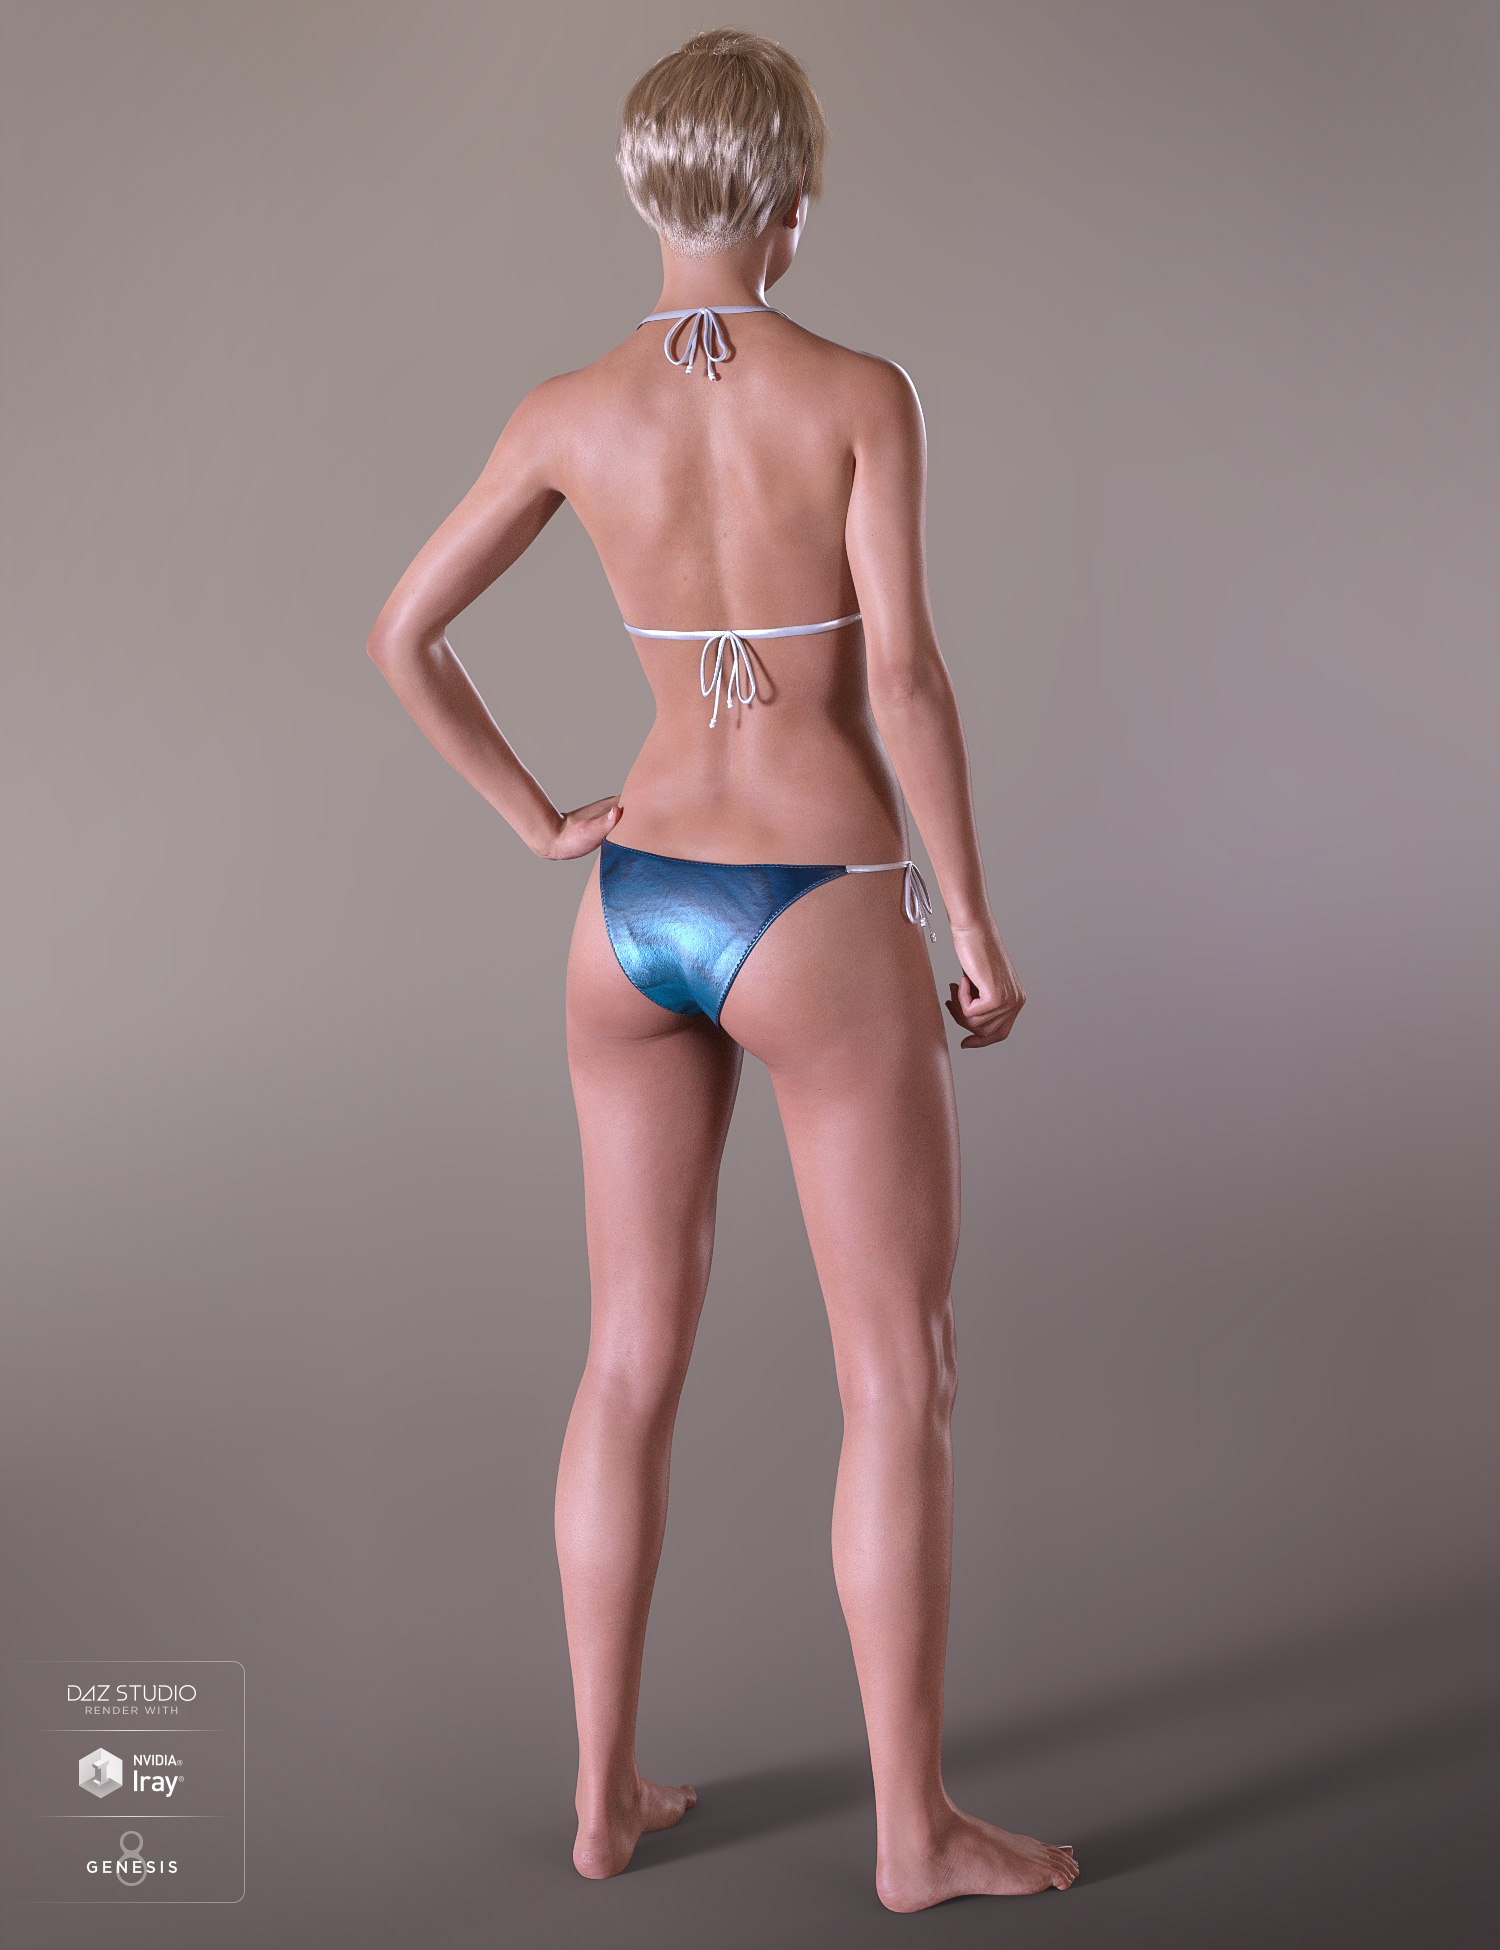 Gabriela 8 by: , 3D Models by Daz 3D